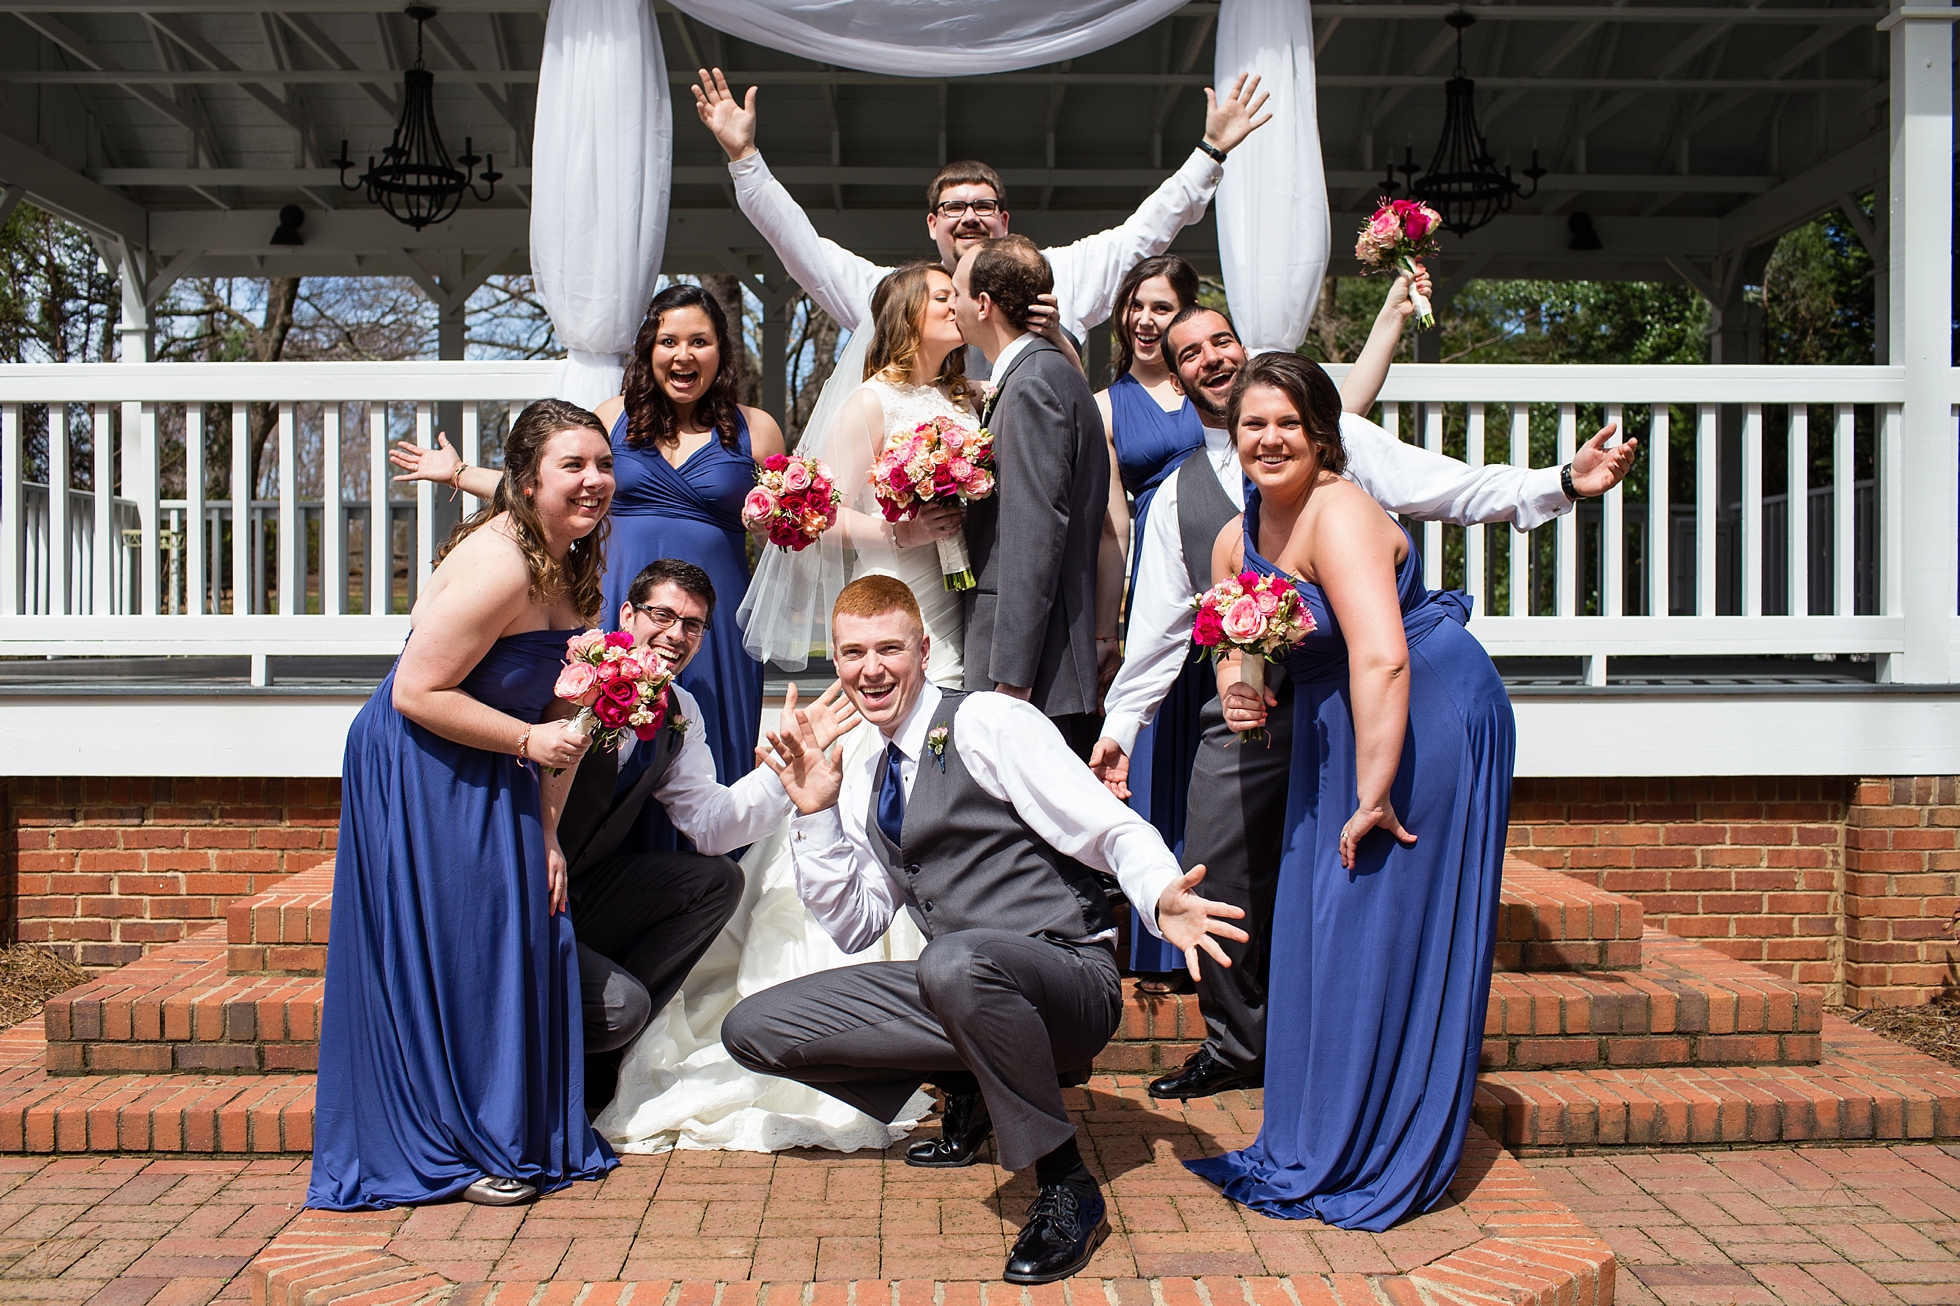 fun silly bridal party photo ideas